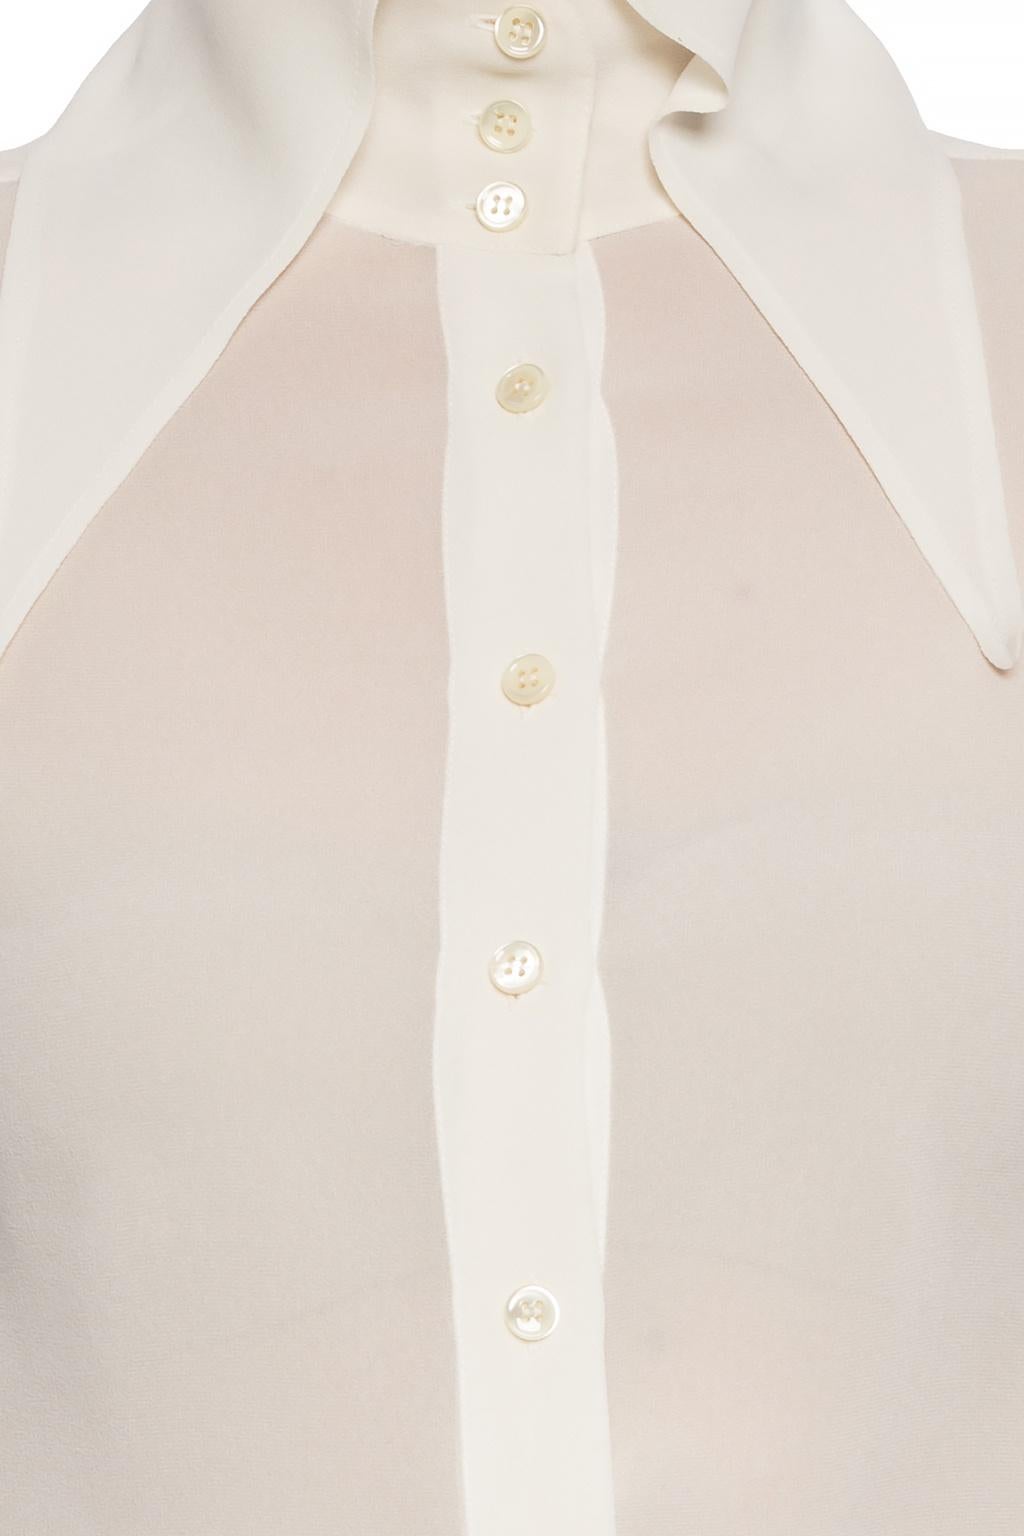 Women's Saint Laurent SS19 Cream Silk Over Sized Collar Shirt Size 36 For Sale